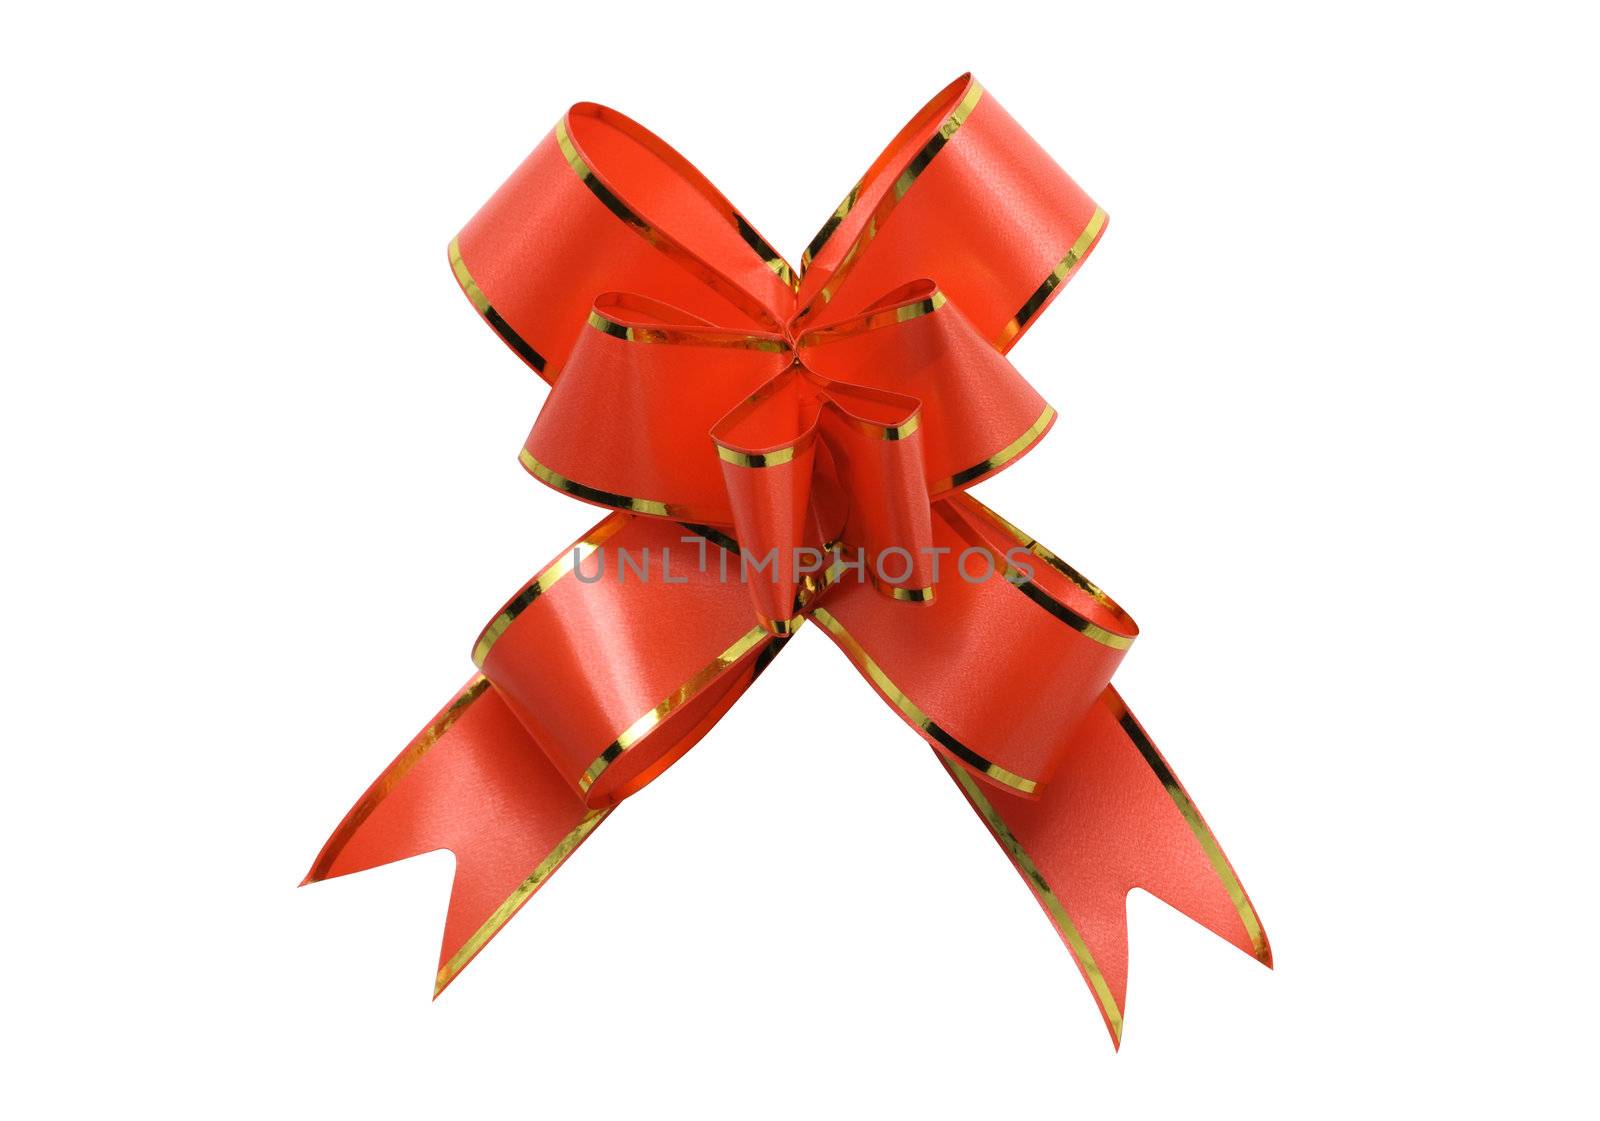 Red Gift Bow by kvkirillov